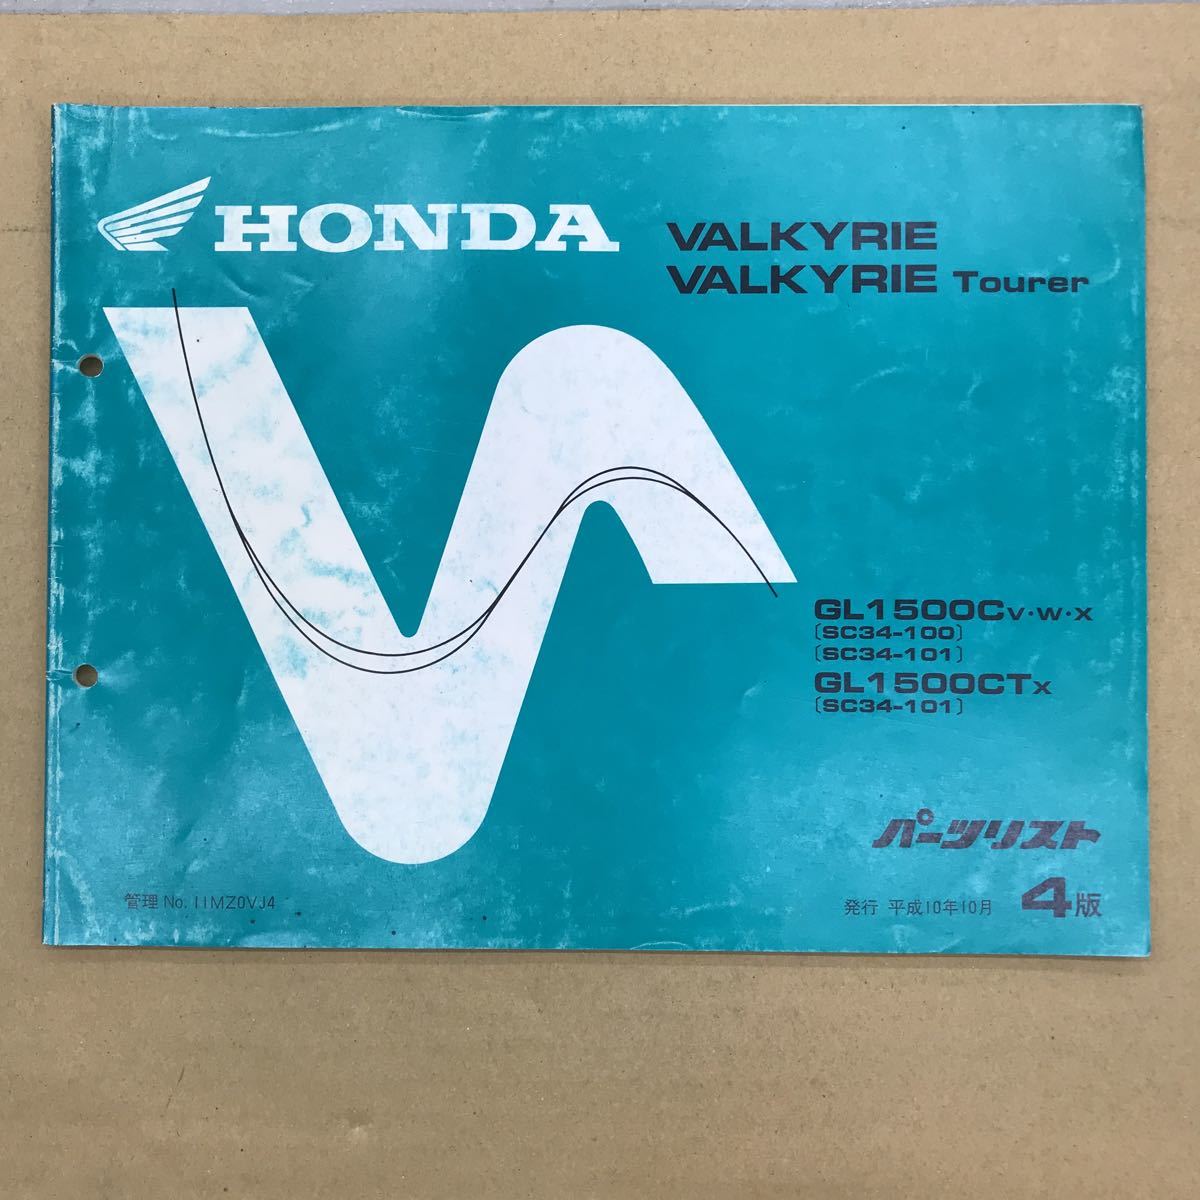 HONDA VALKYRIE/VALKYRIE Tourer ...  список запасных частей   Запчасти  каталог   Хонда 